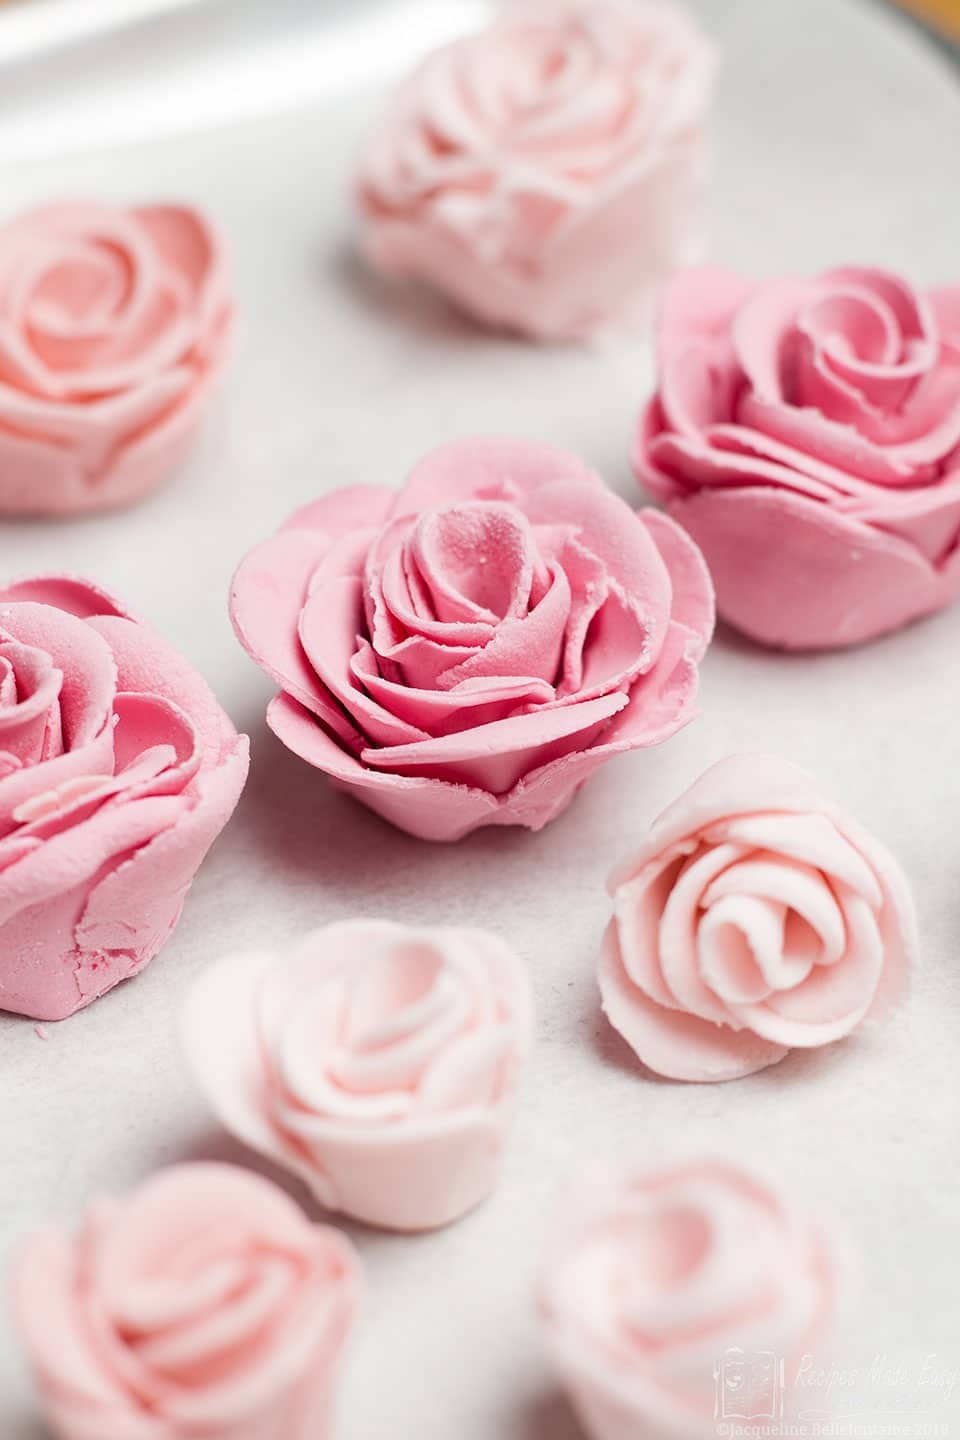 Sugar roses on a baking sheet